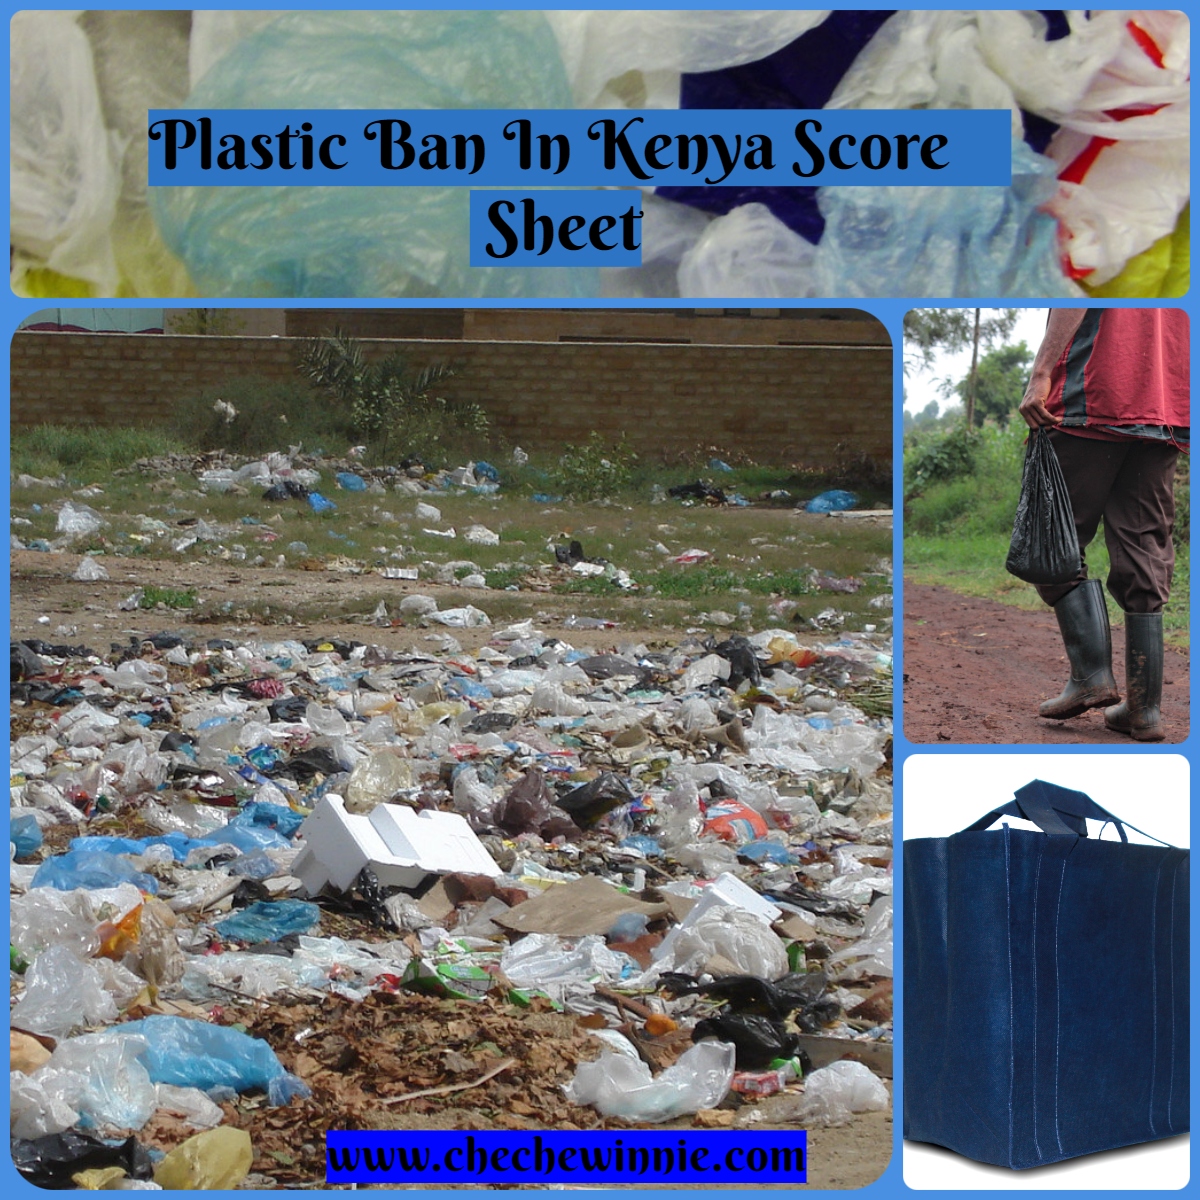 Plastic Ban In Kenya Score Sheet